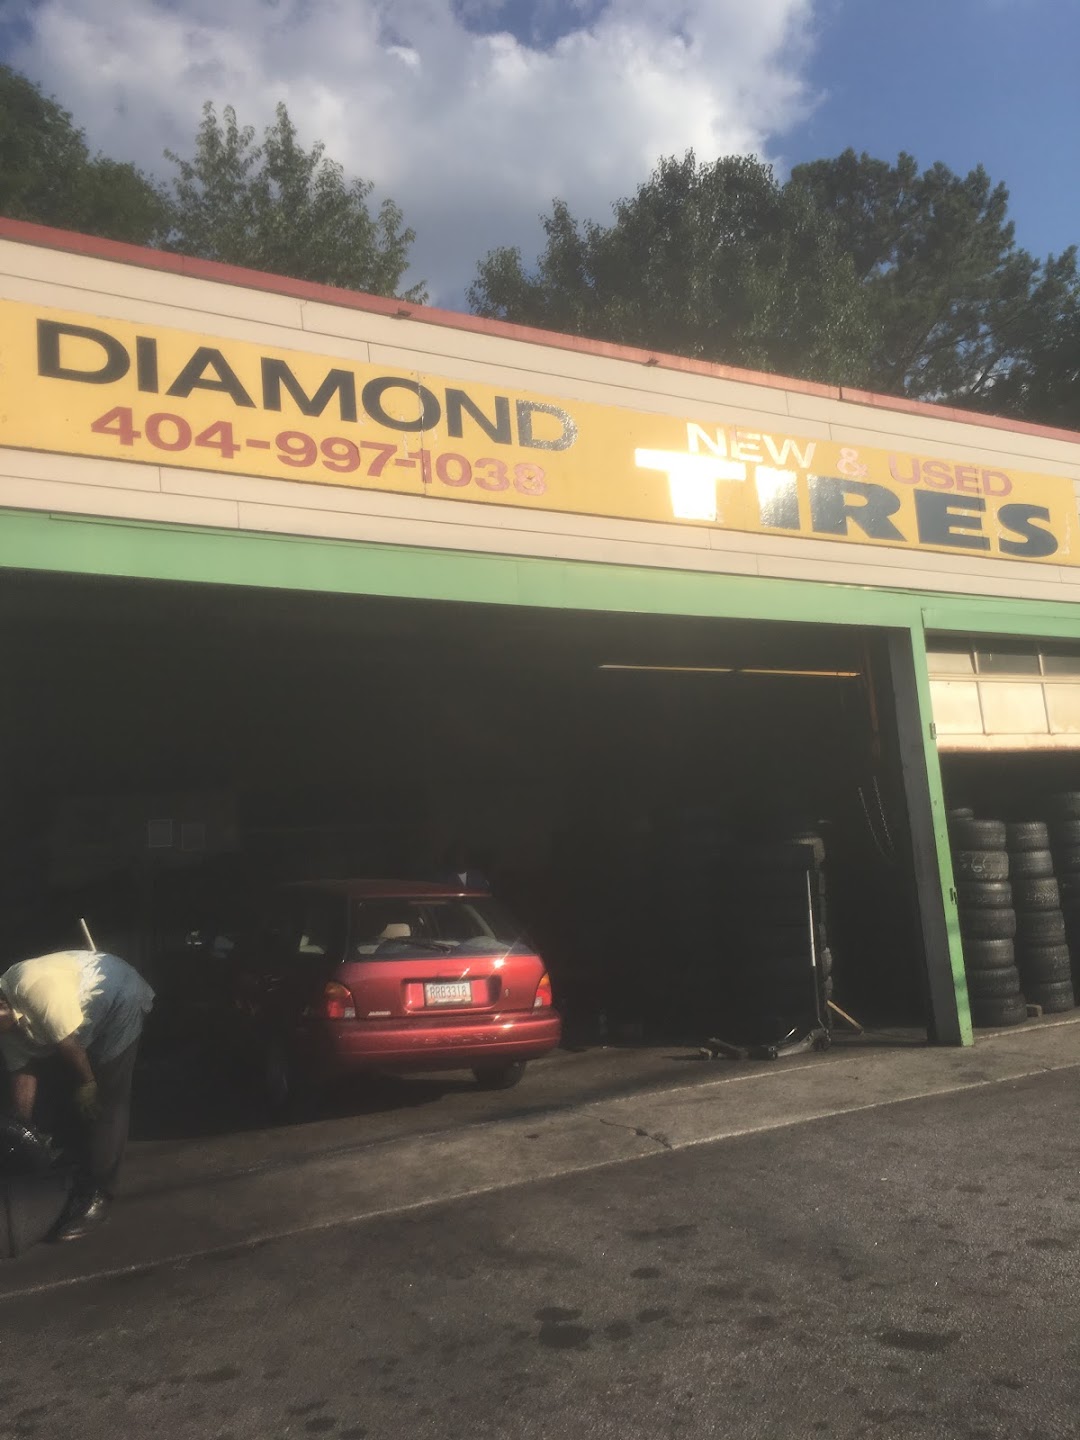 Diamond New & Used Tires